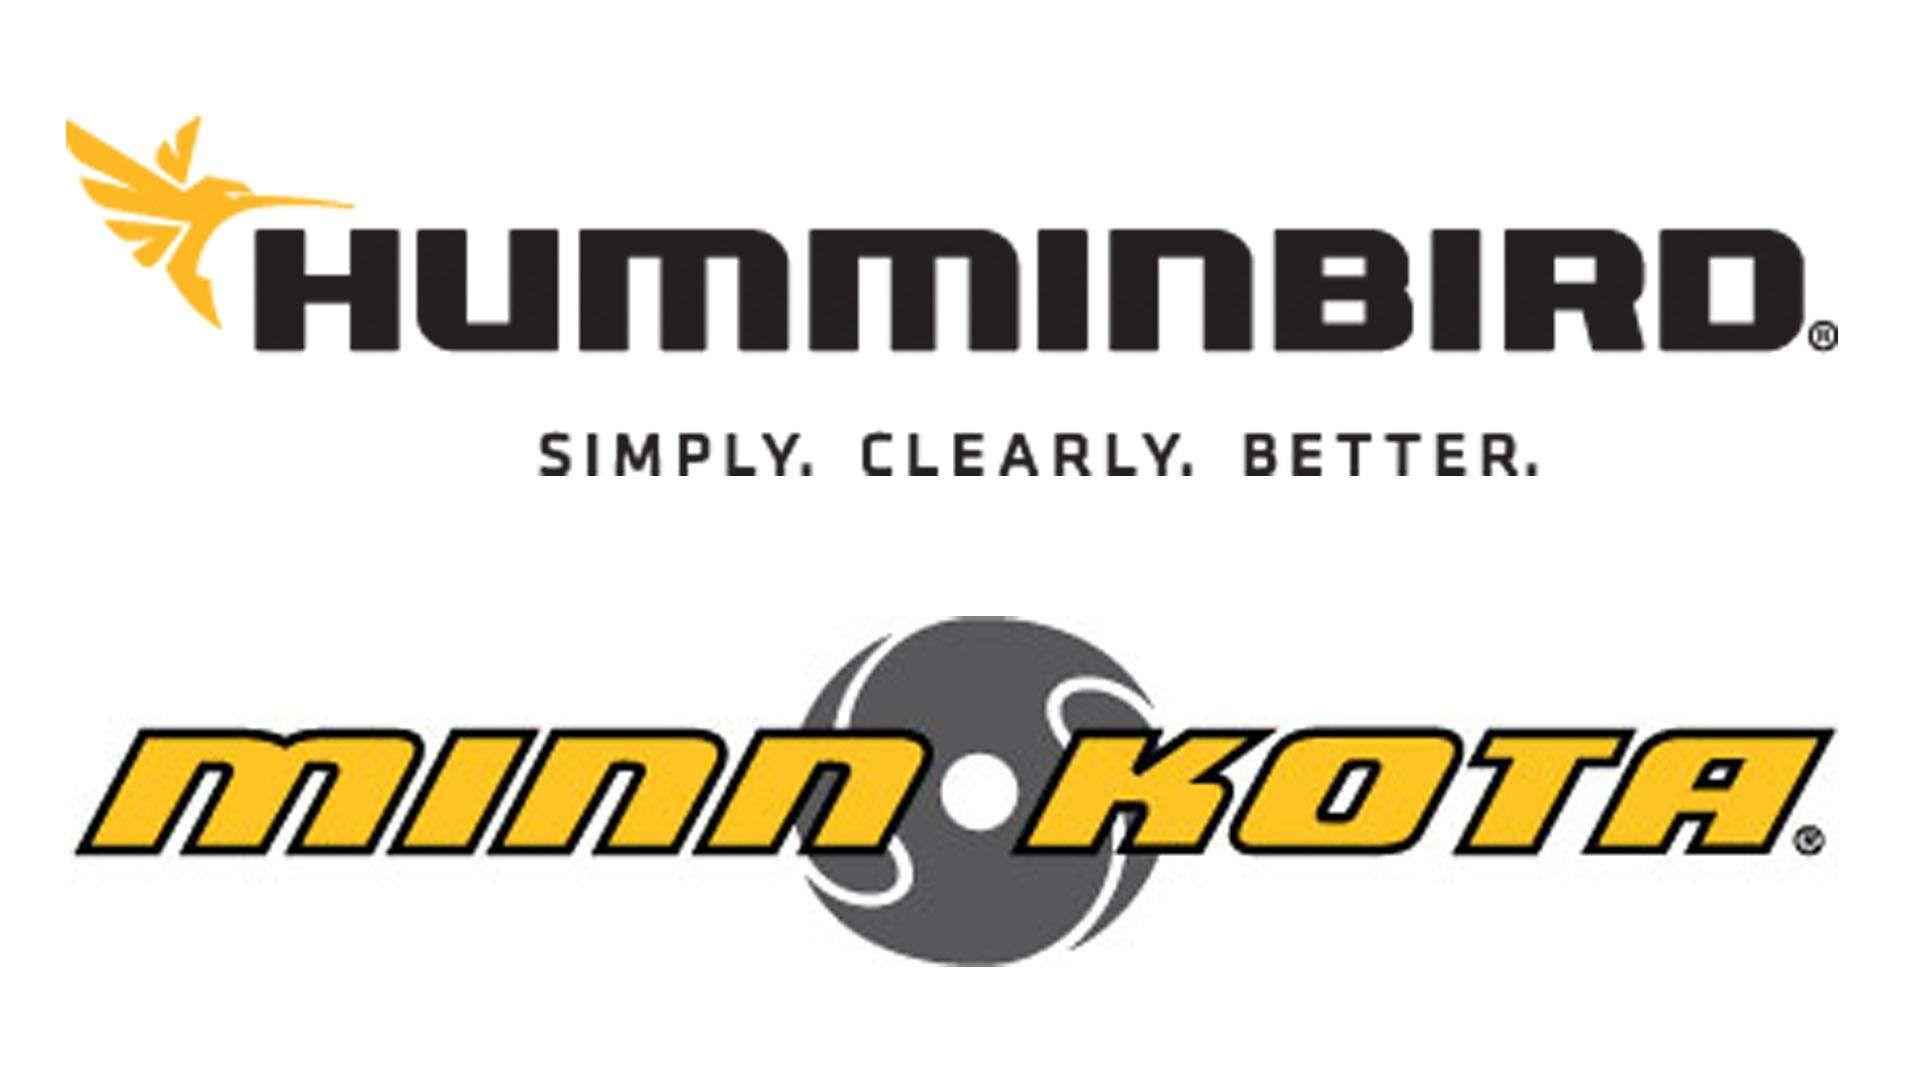 Humminbird Logo - Image result for humminbird logo | Aggressive Logo | Pinterest | Logos